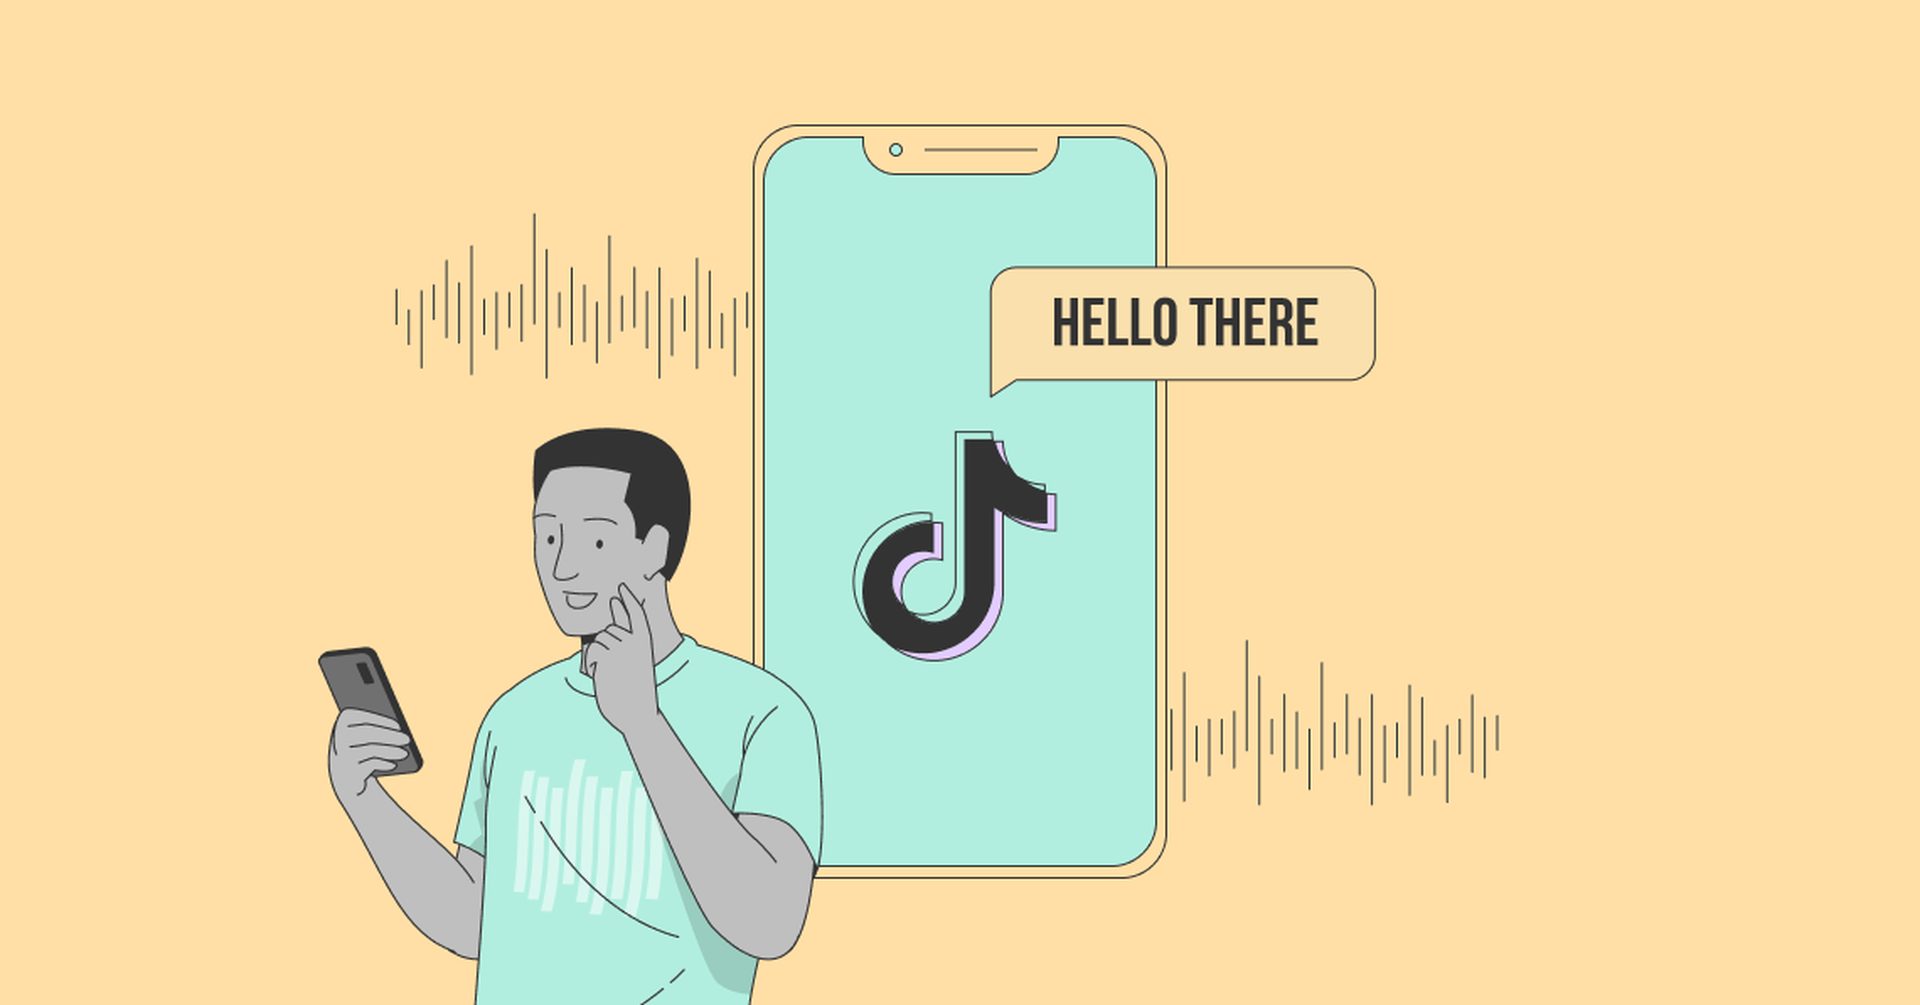 How to get Jessie voice on TikTok: Text-to-speech feature